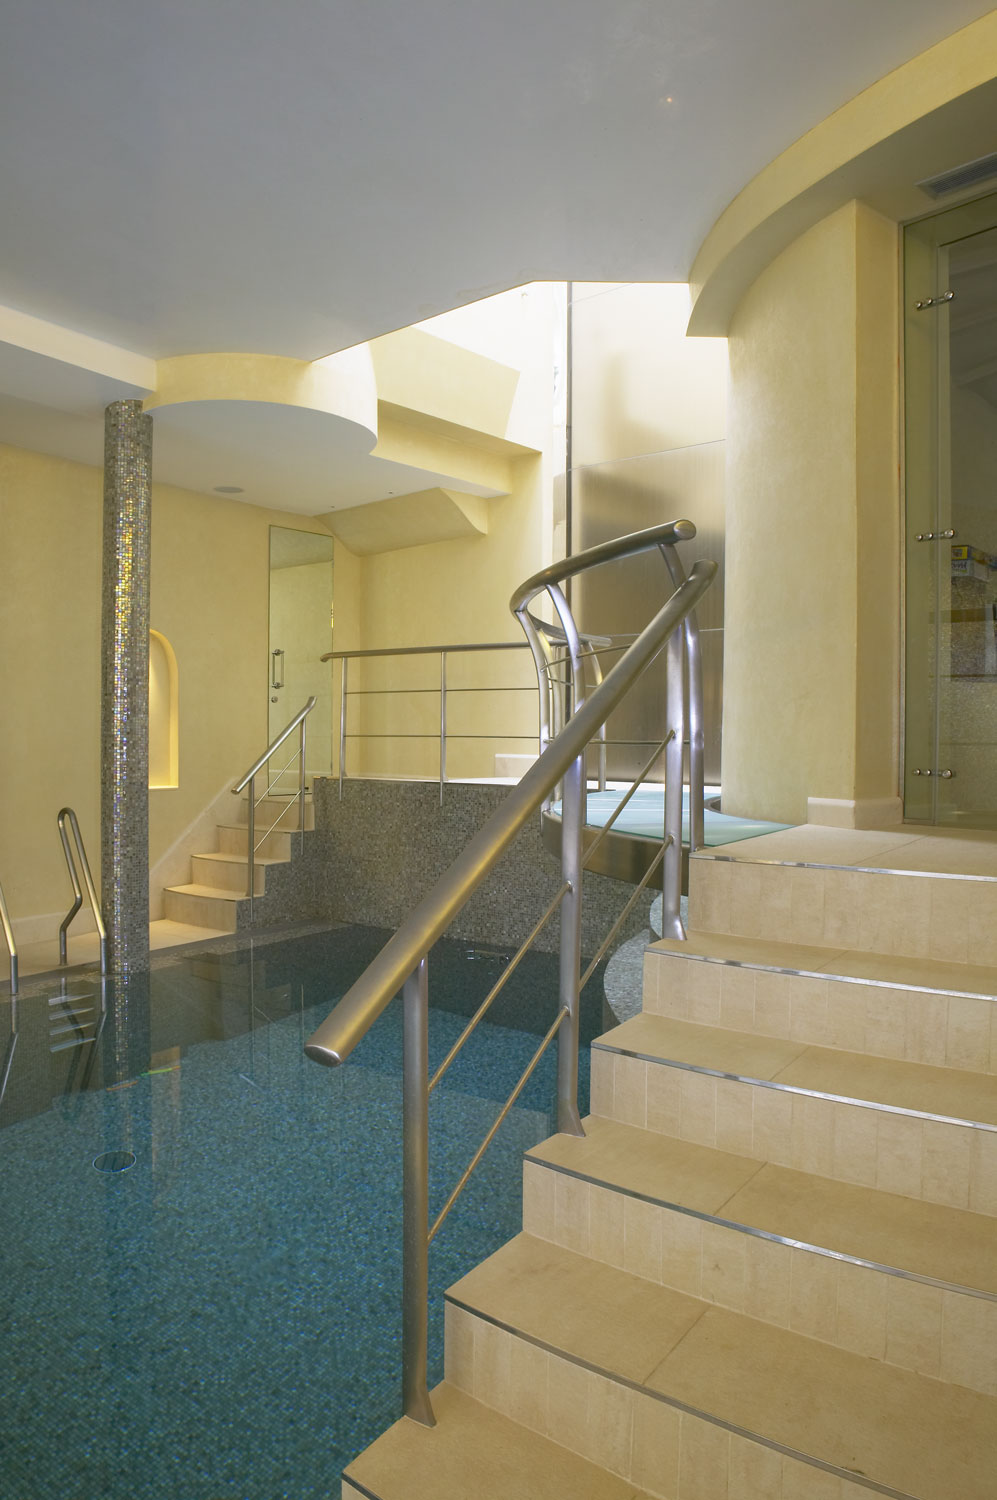 Whitestone House basement pool and sauna | Residential Photographer UK